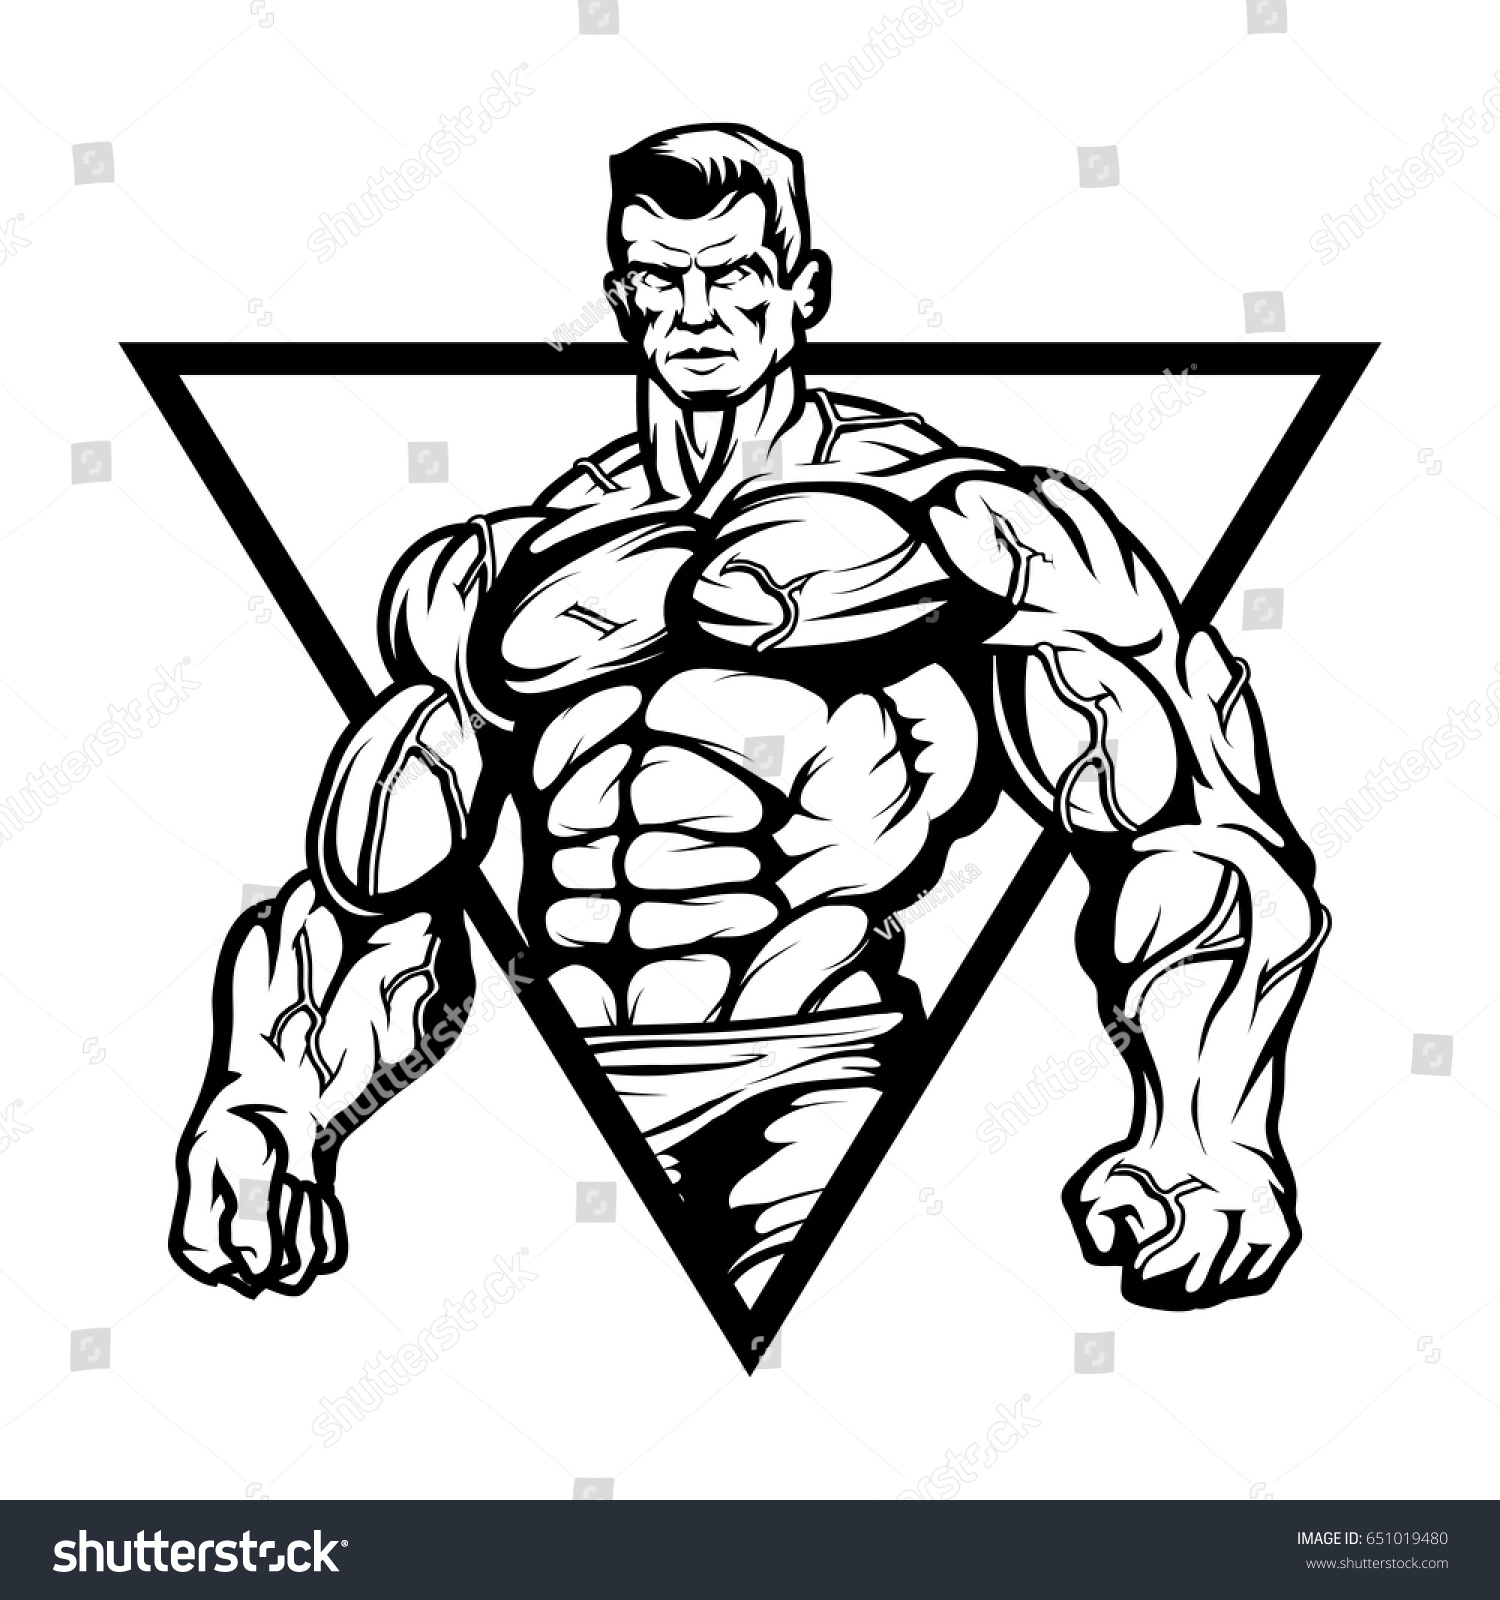 Gym Logobodybuilder Muscular Bodysexy Man Beautiful: Vector Có Sẵn (Miễn  Phí Bản Quyền) 651019480 | Shutterstock